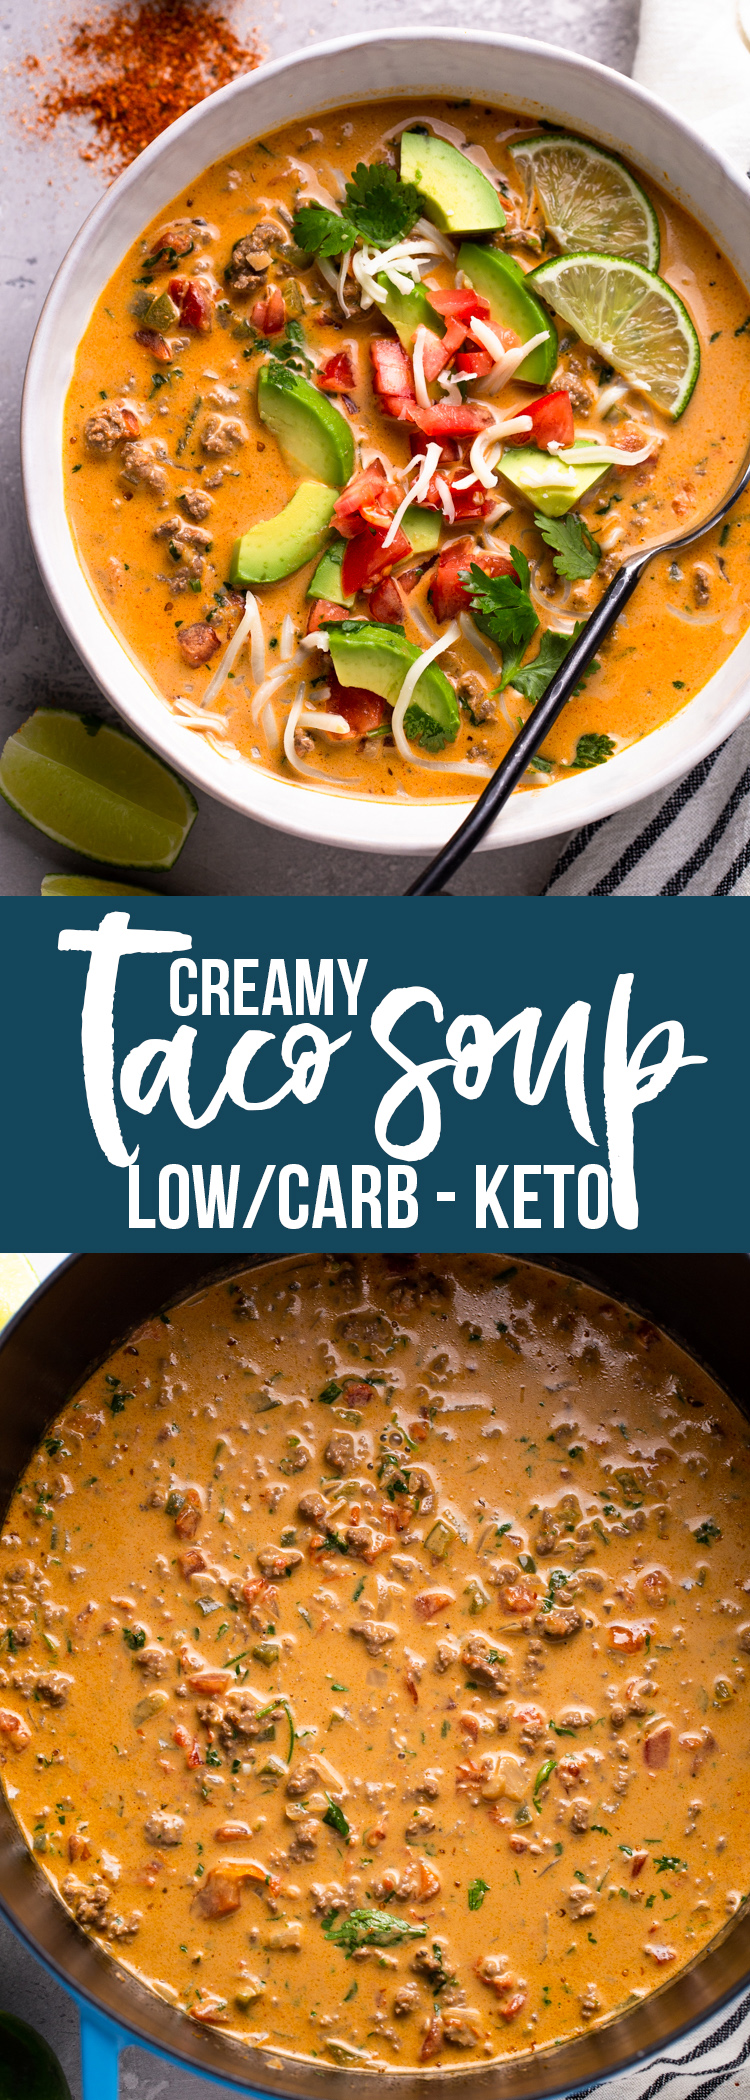 Creamy Taco Soup (Low Carb/Keto)